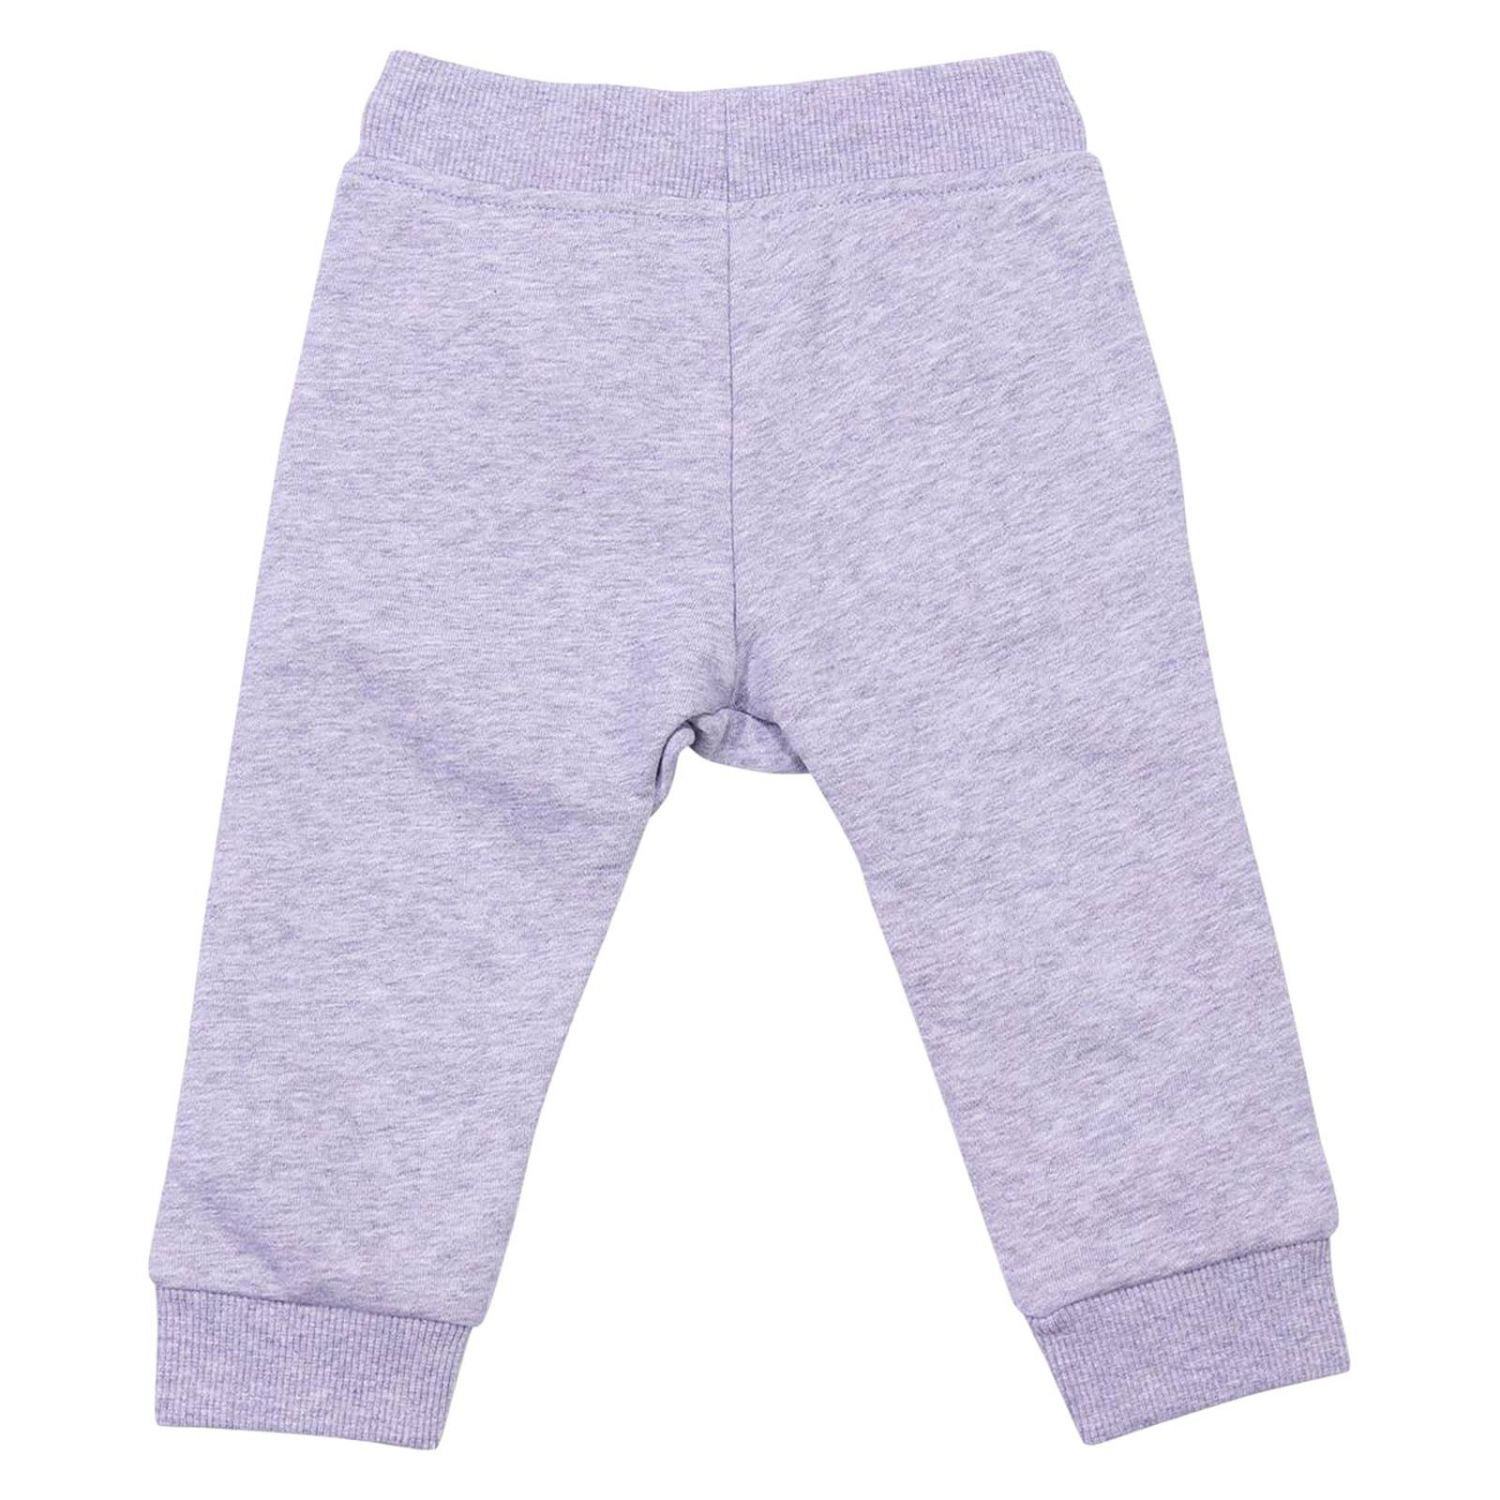 Kenzo Junior Outlet: Pants kids - Grey | Pants Kenzo Junior KM23537 ...